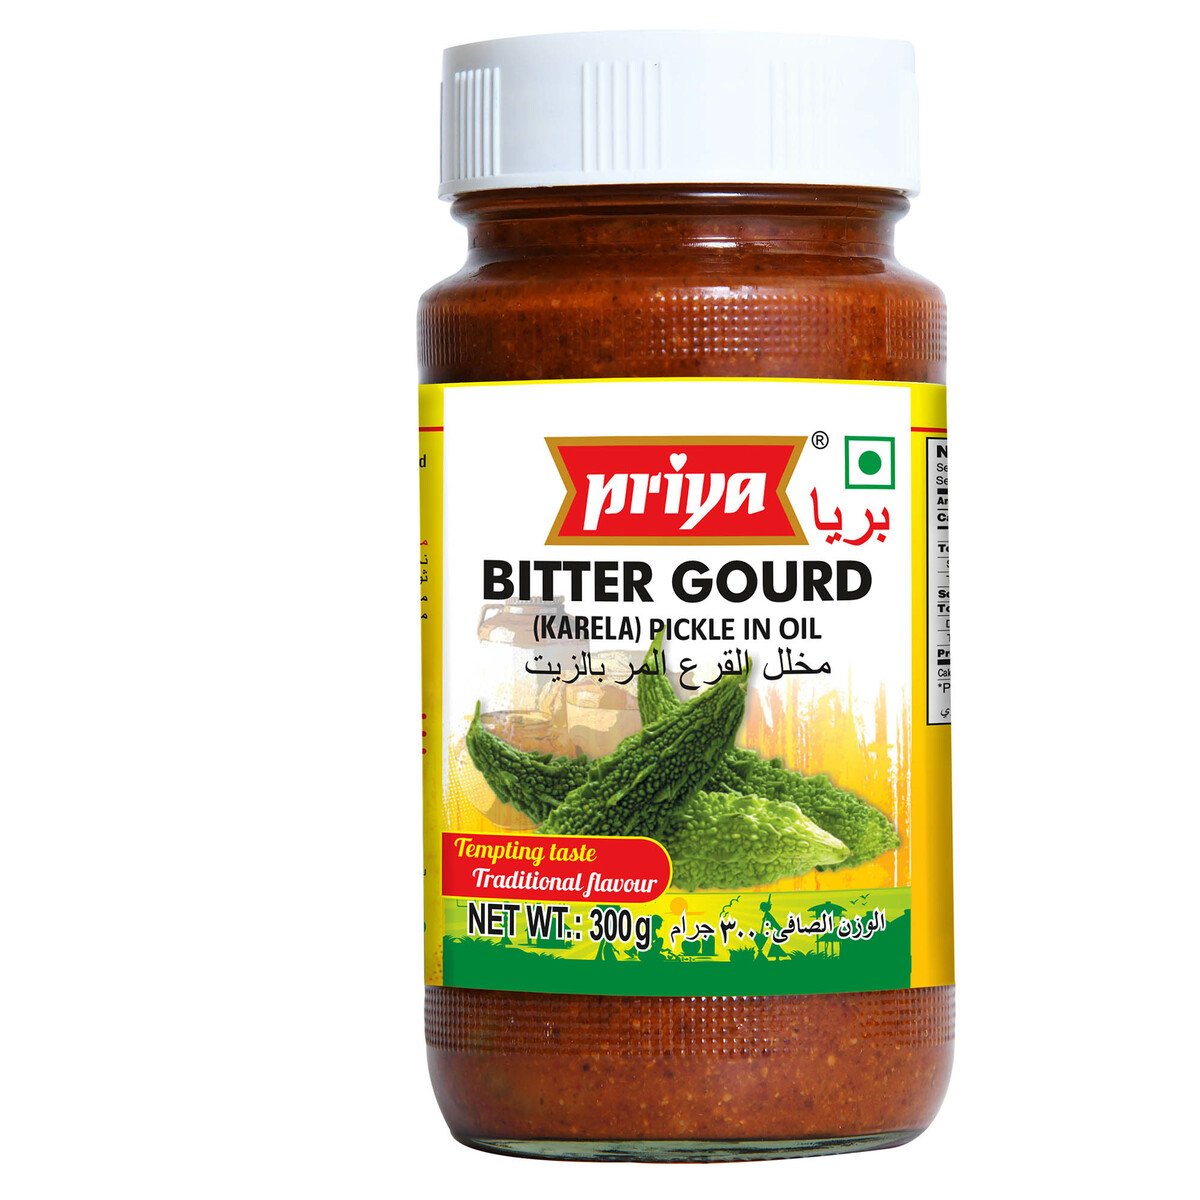 Priya Bitter Gourd Pickle In Oil 300g